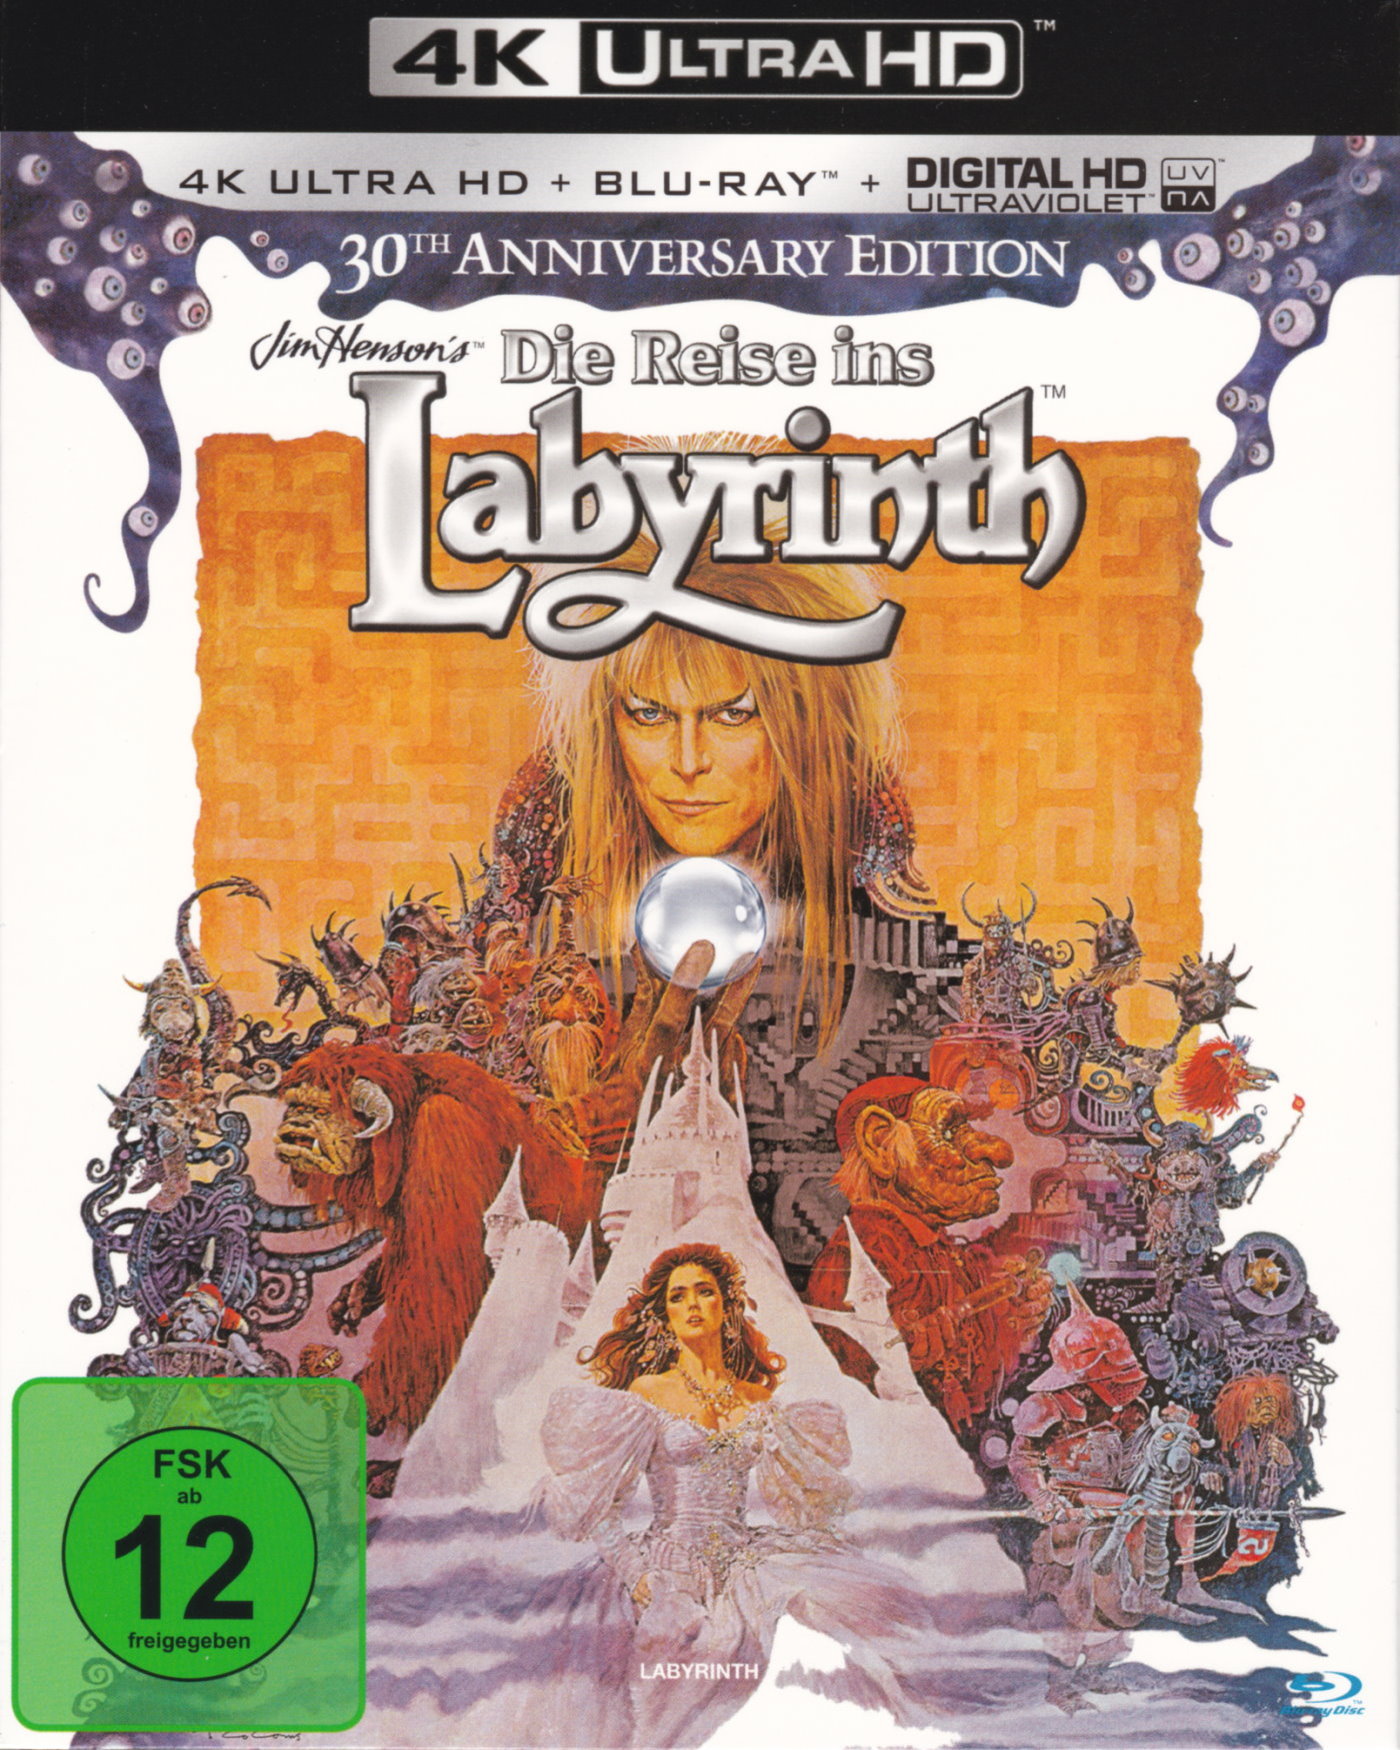 Cover - Die Reise ins Labyrinth.jpg